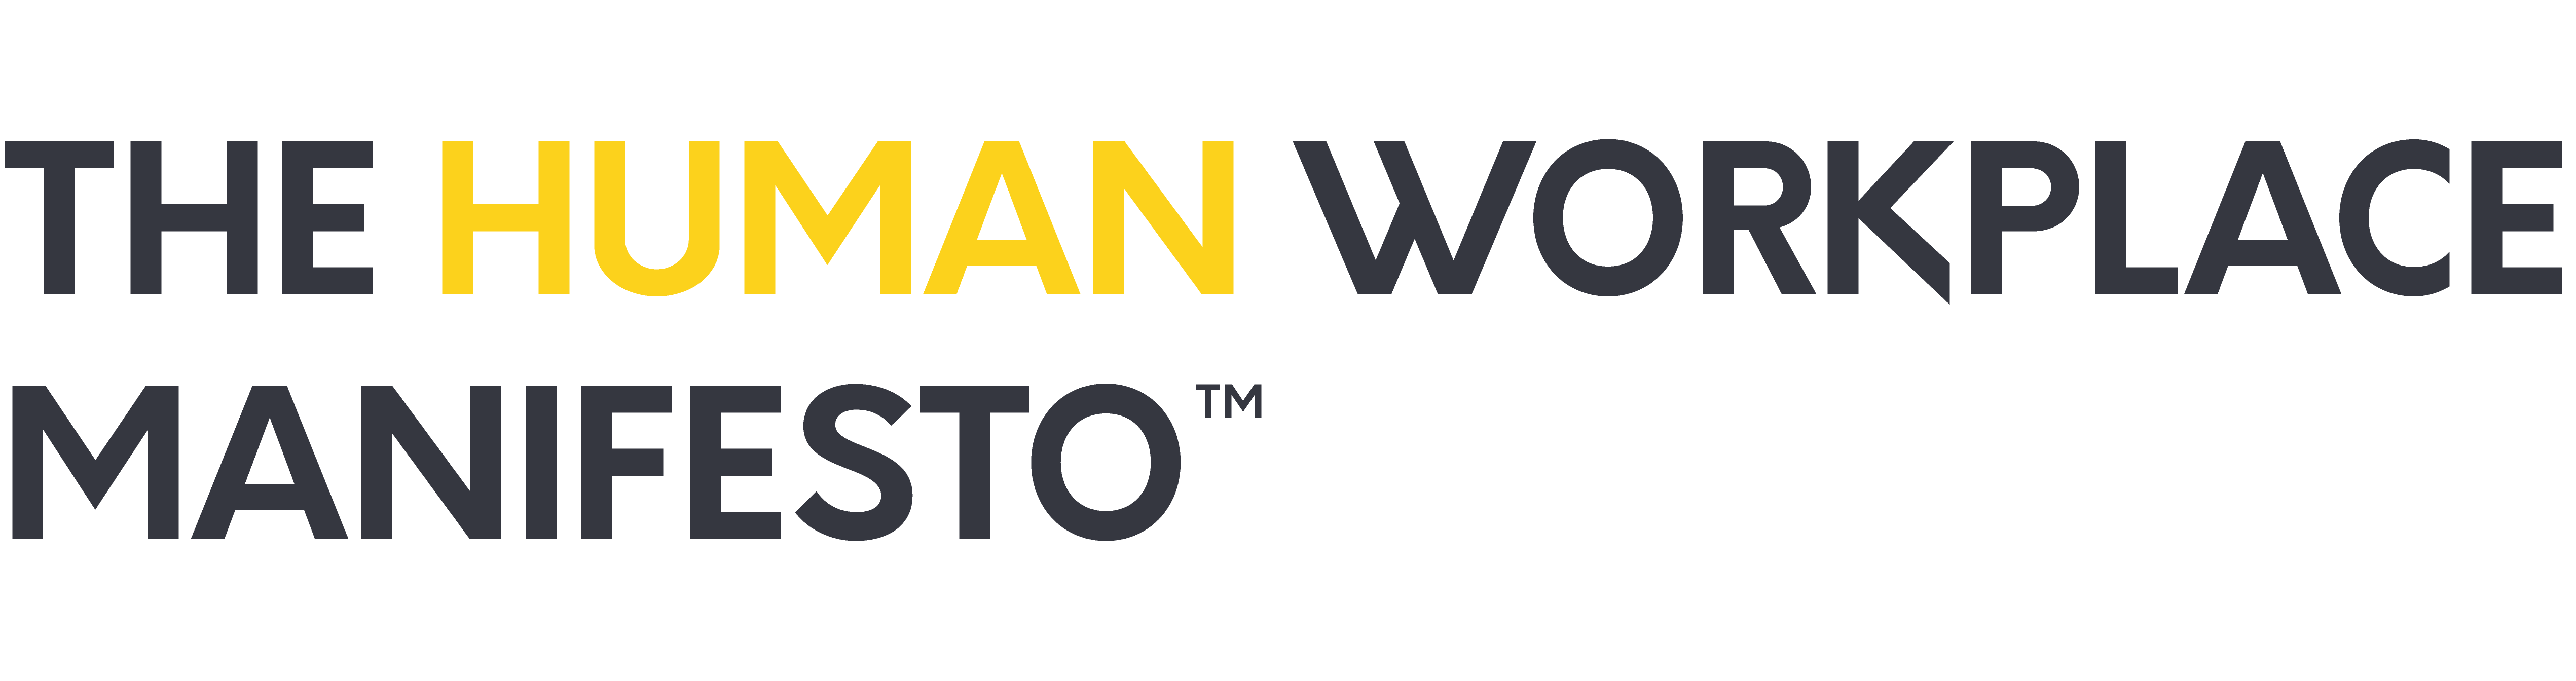 Workplace Logo - Home Human Workplace Manifesto™